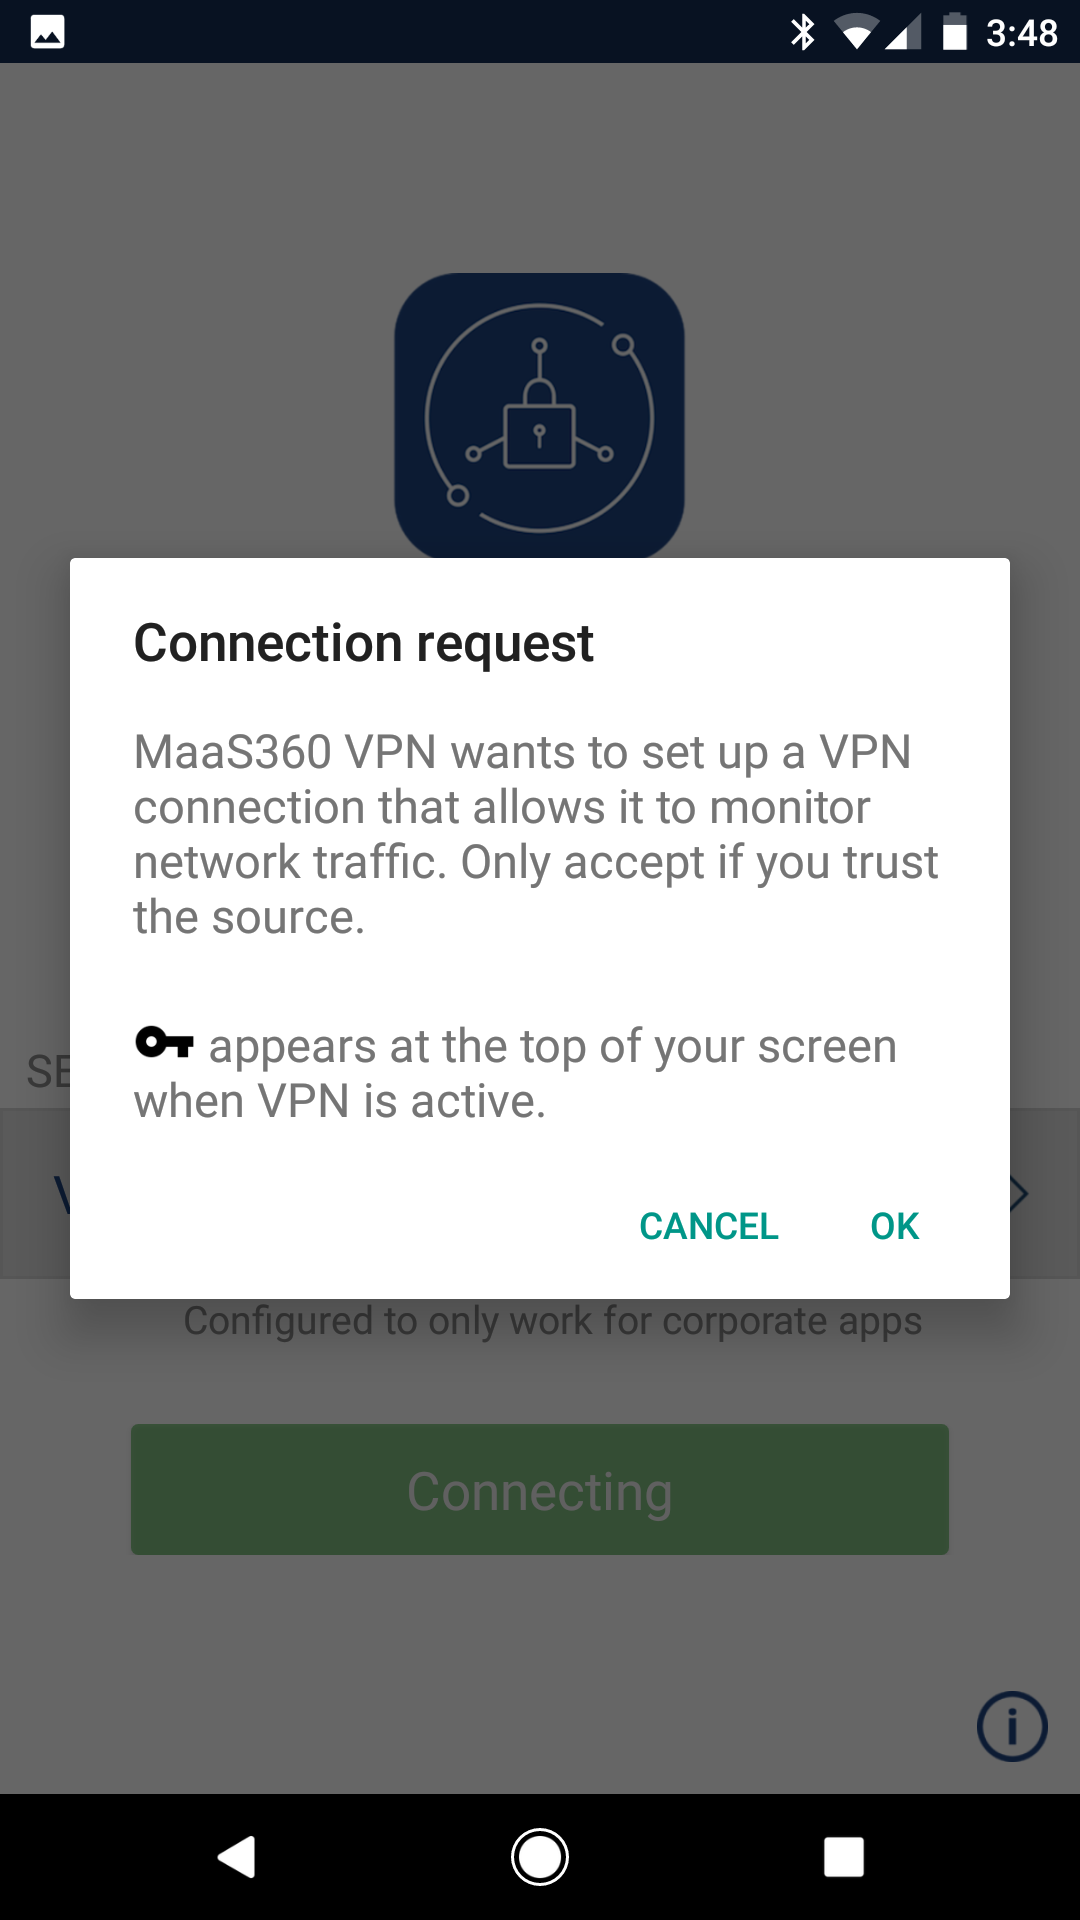 MaaS360 VPN app profile settings